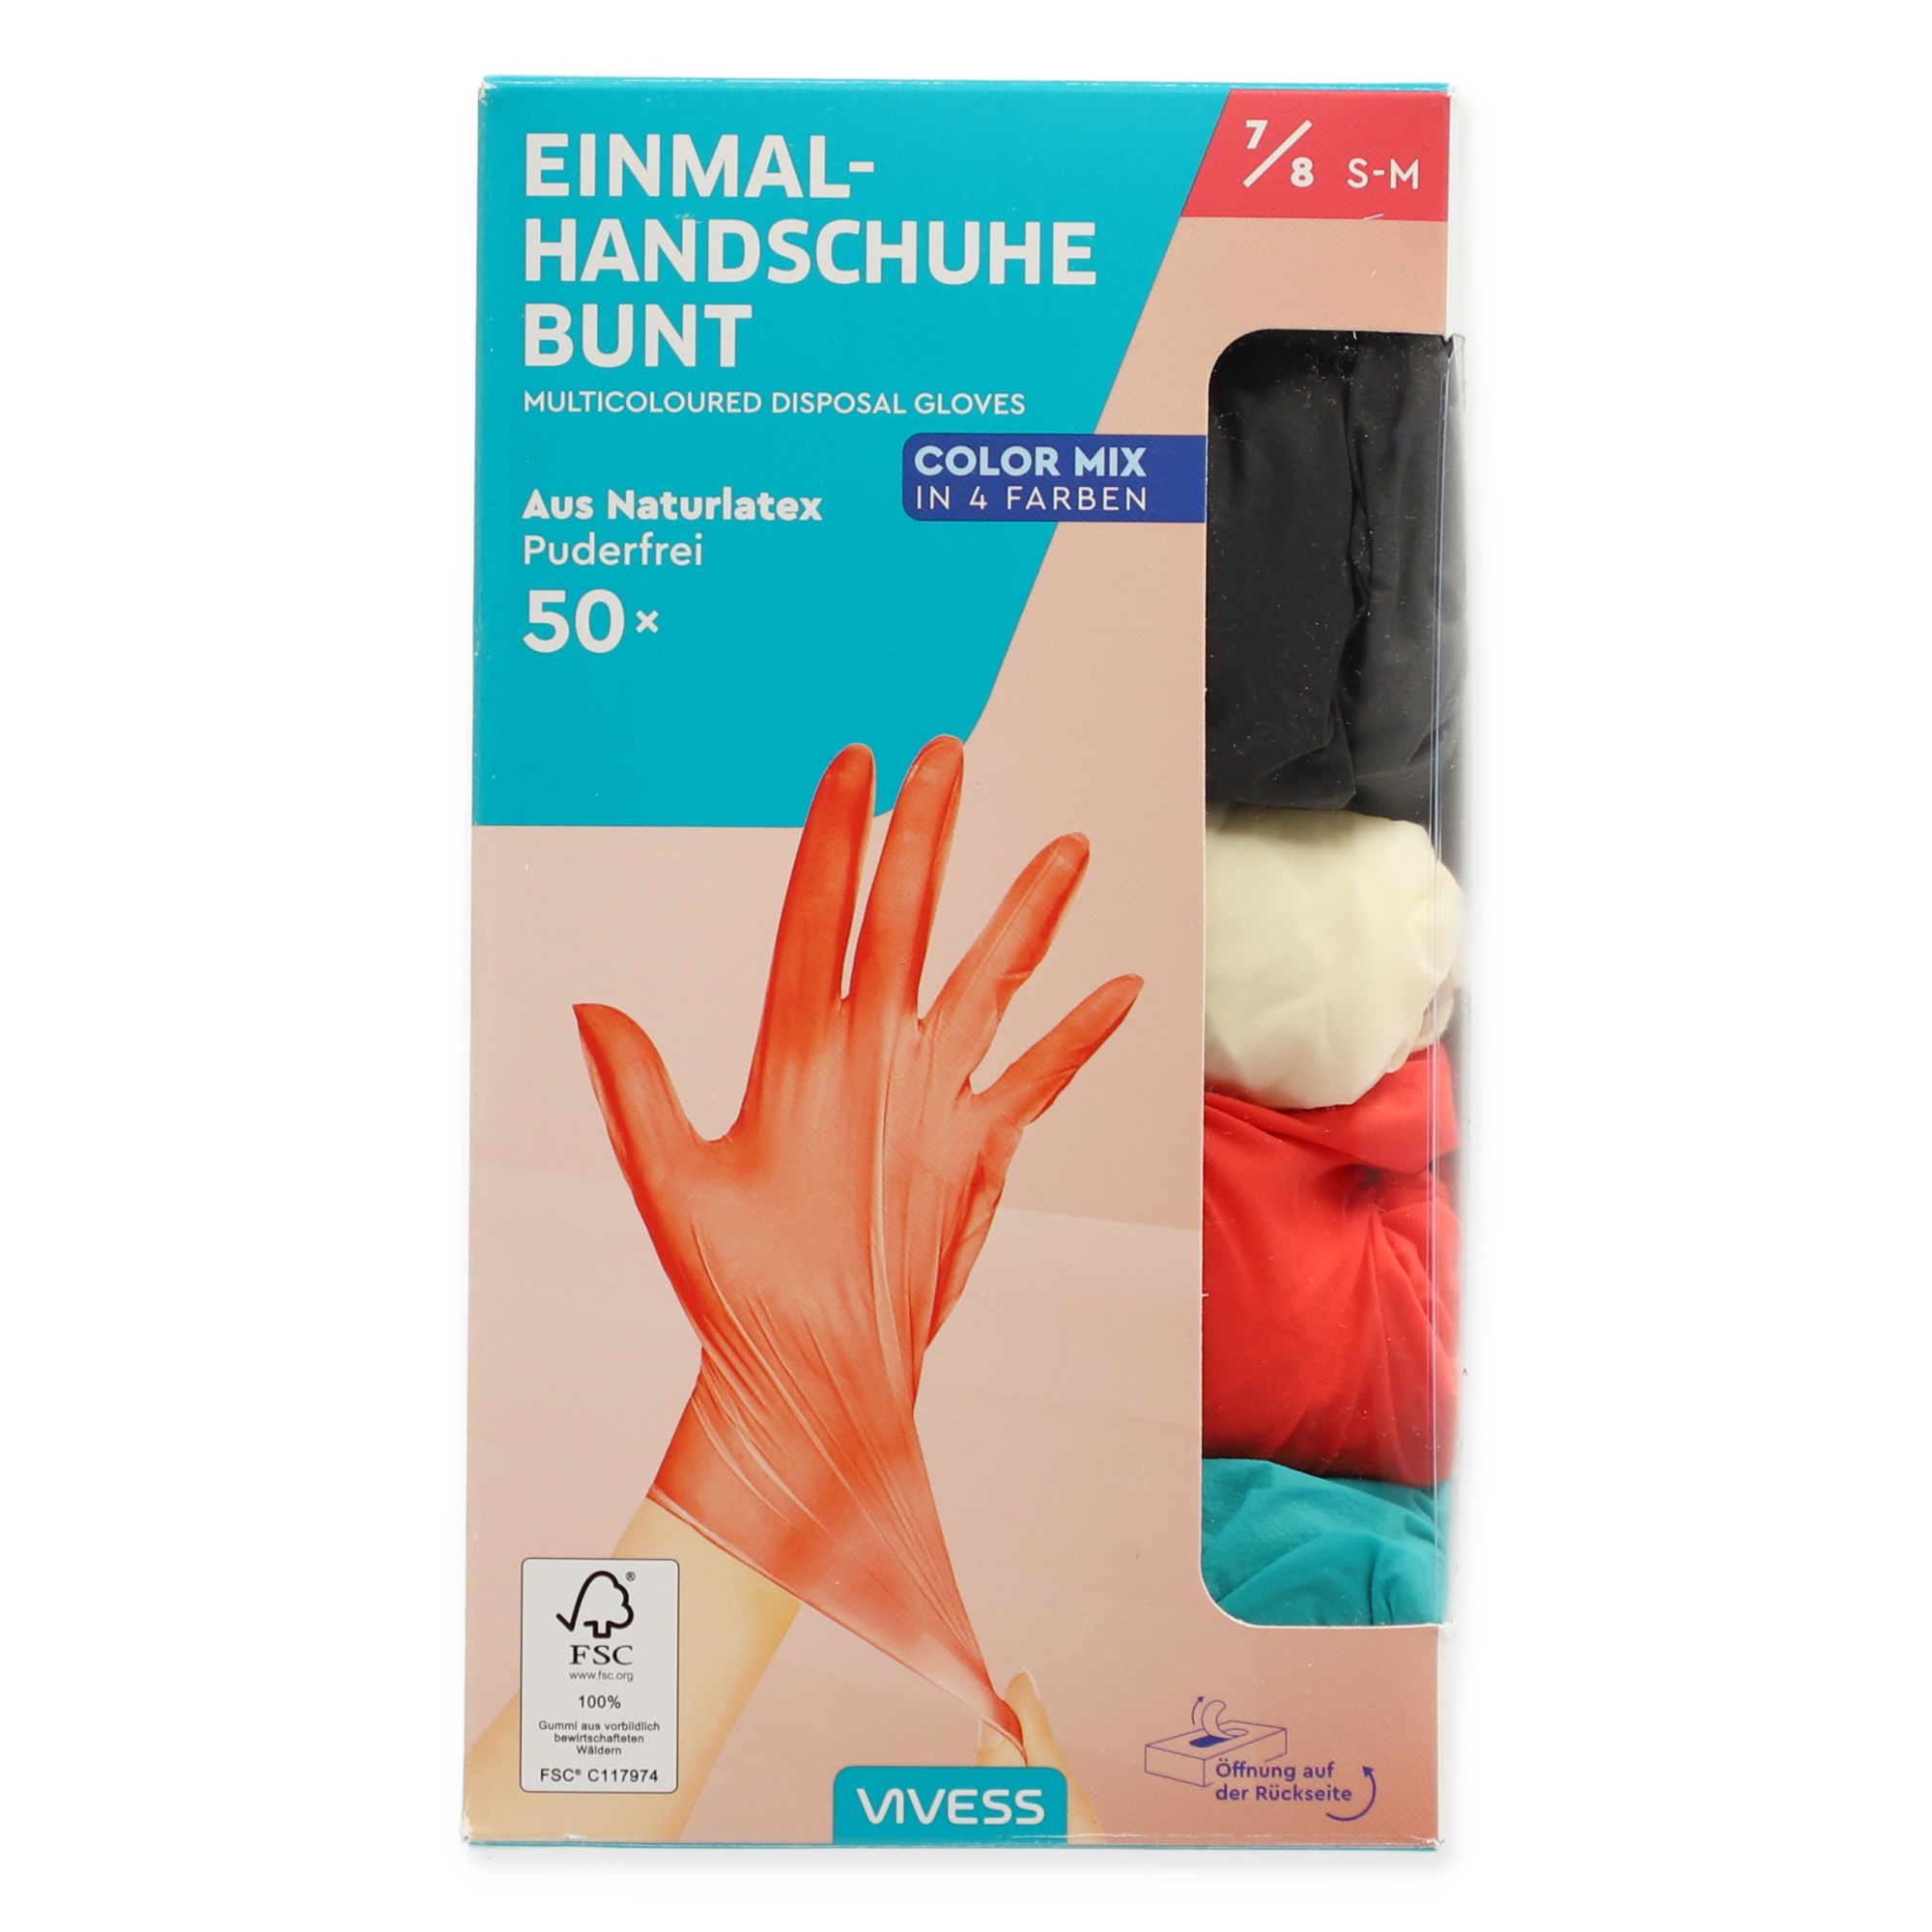 Einmal-Handschuhe Latex bunt Gr. S/M 50 Stück + product picture